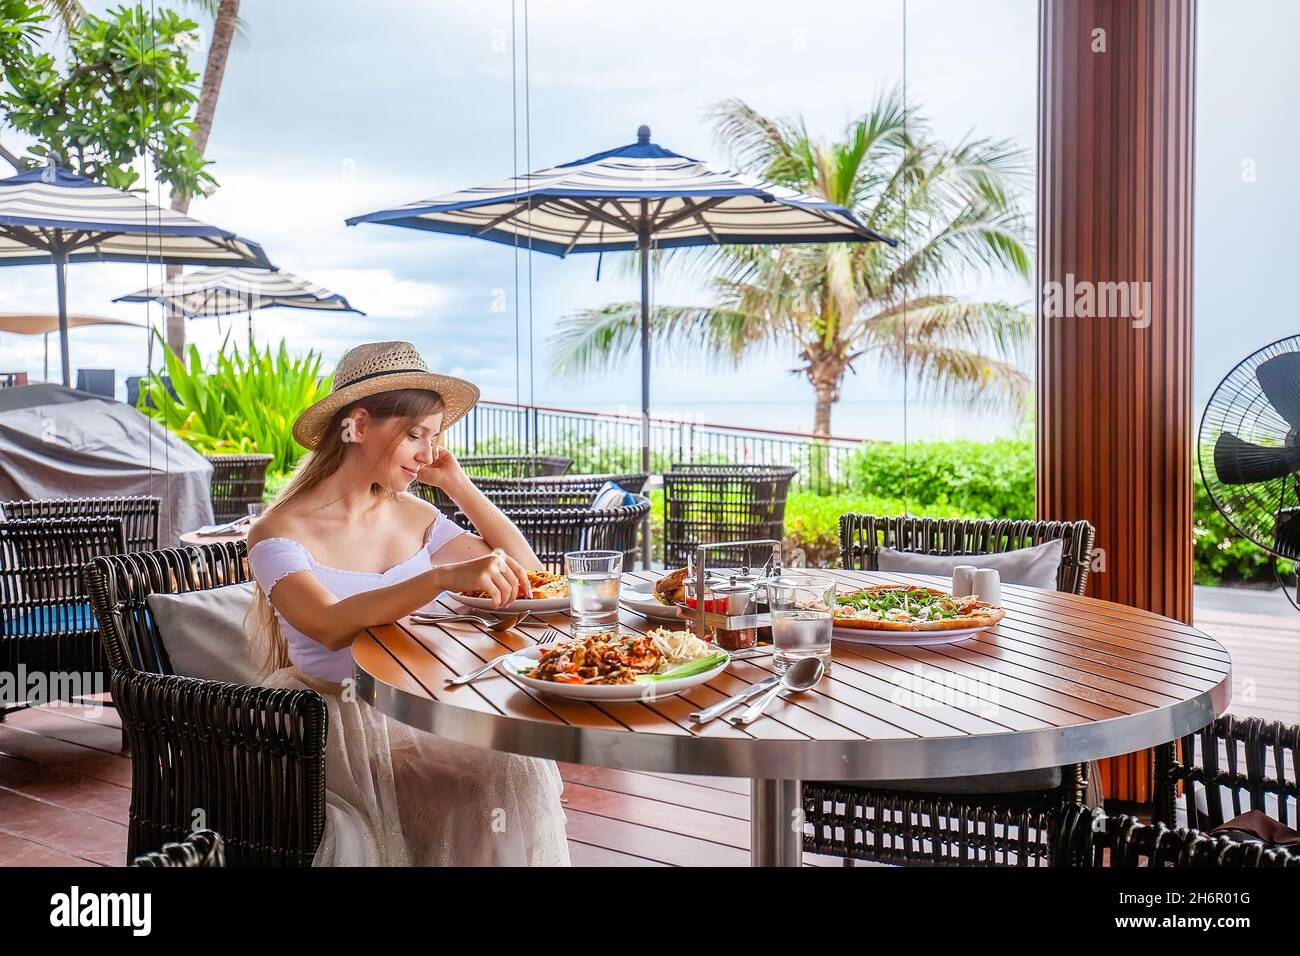 Attractive woman eats italian pasta in outdoor restaurant or cafe, prepared food Stock Photo